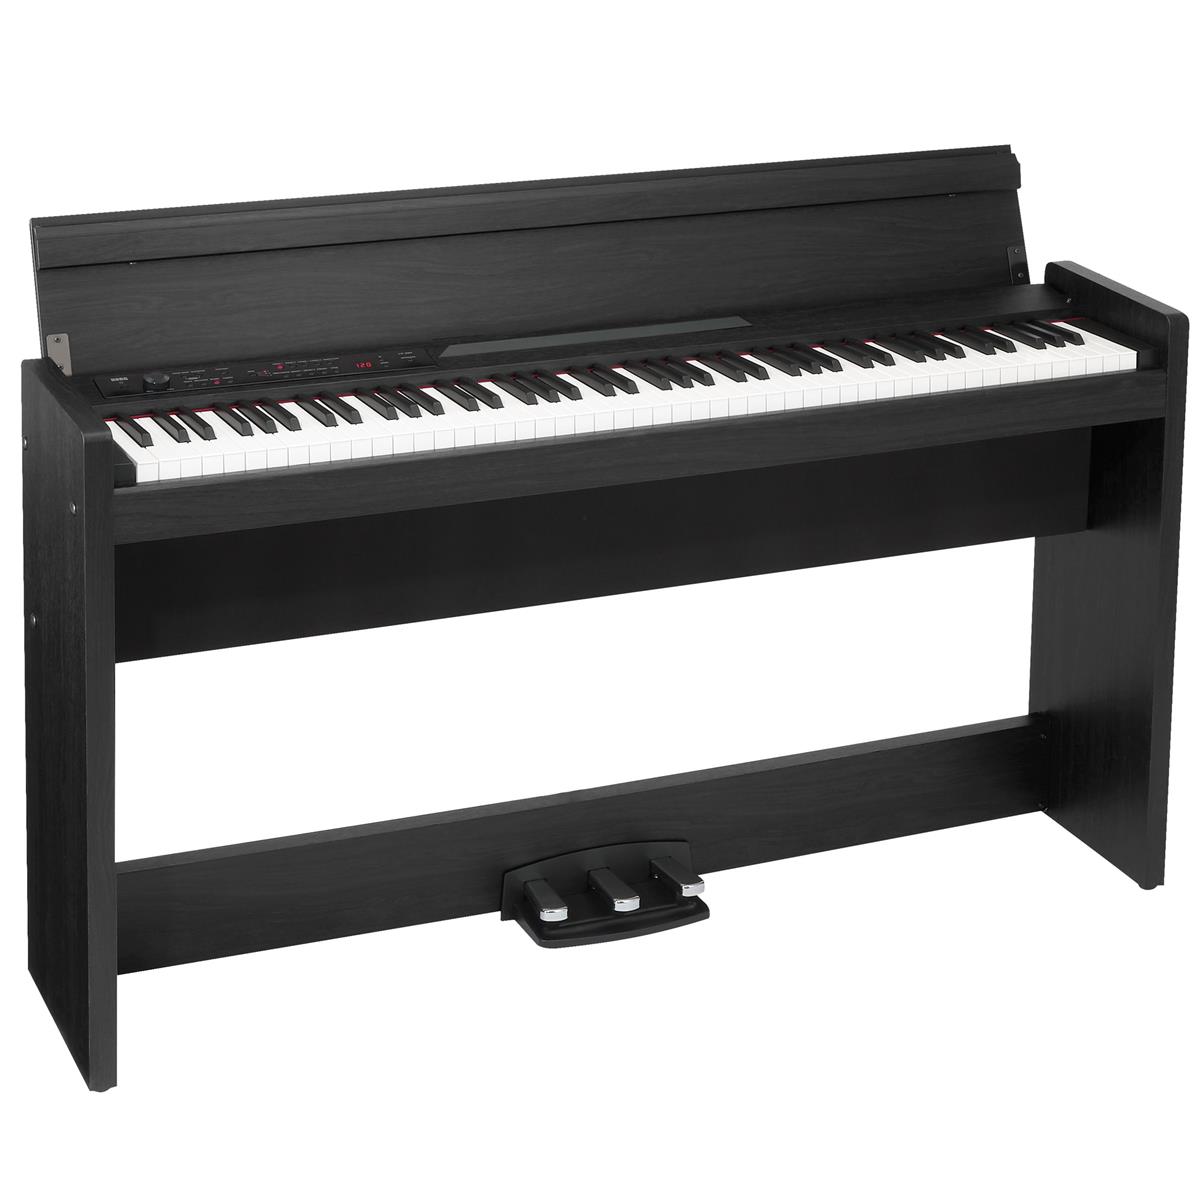 Korg LP-380 88-Keys Grand Digital Piano $749 + free s/h